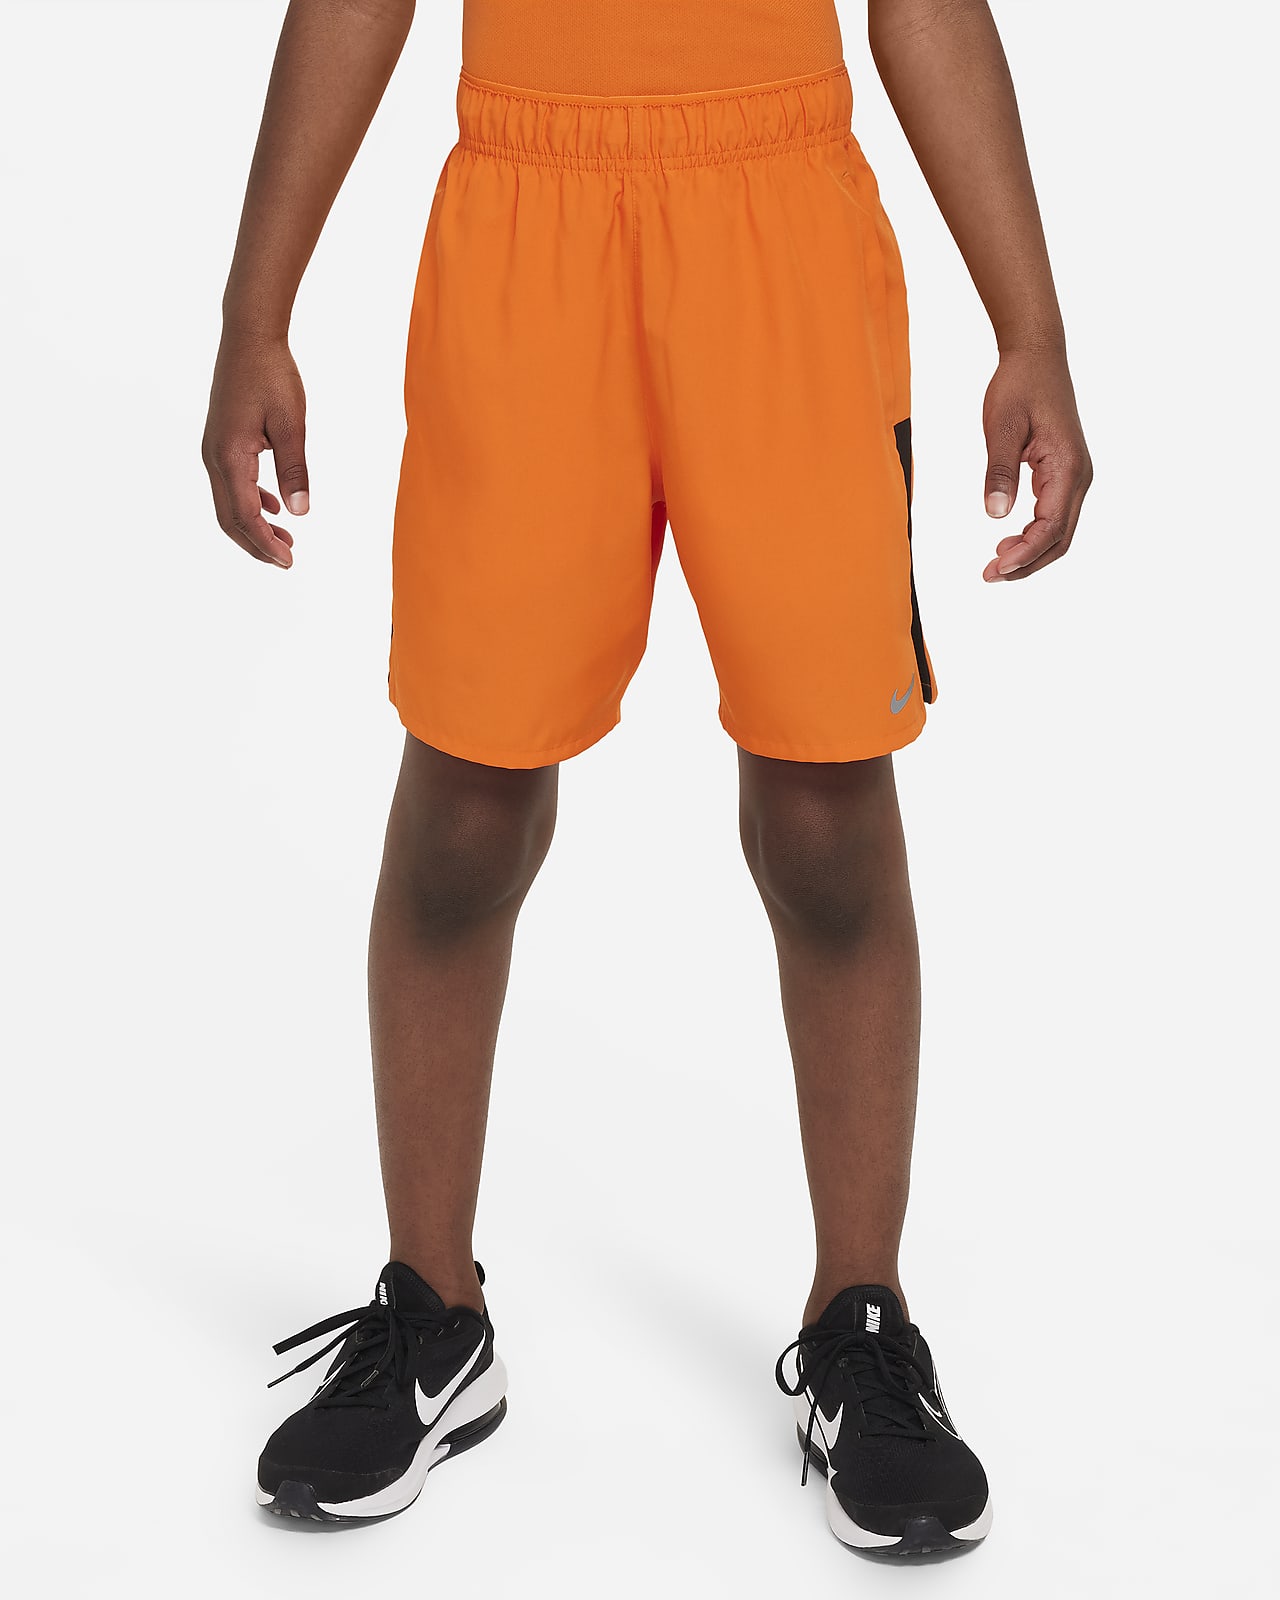 Nike Dri-FIT Challenger Pantalons curts d'entrenament - Nen